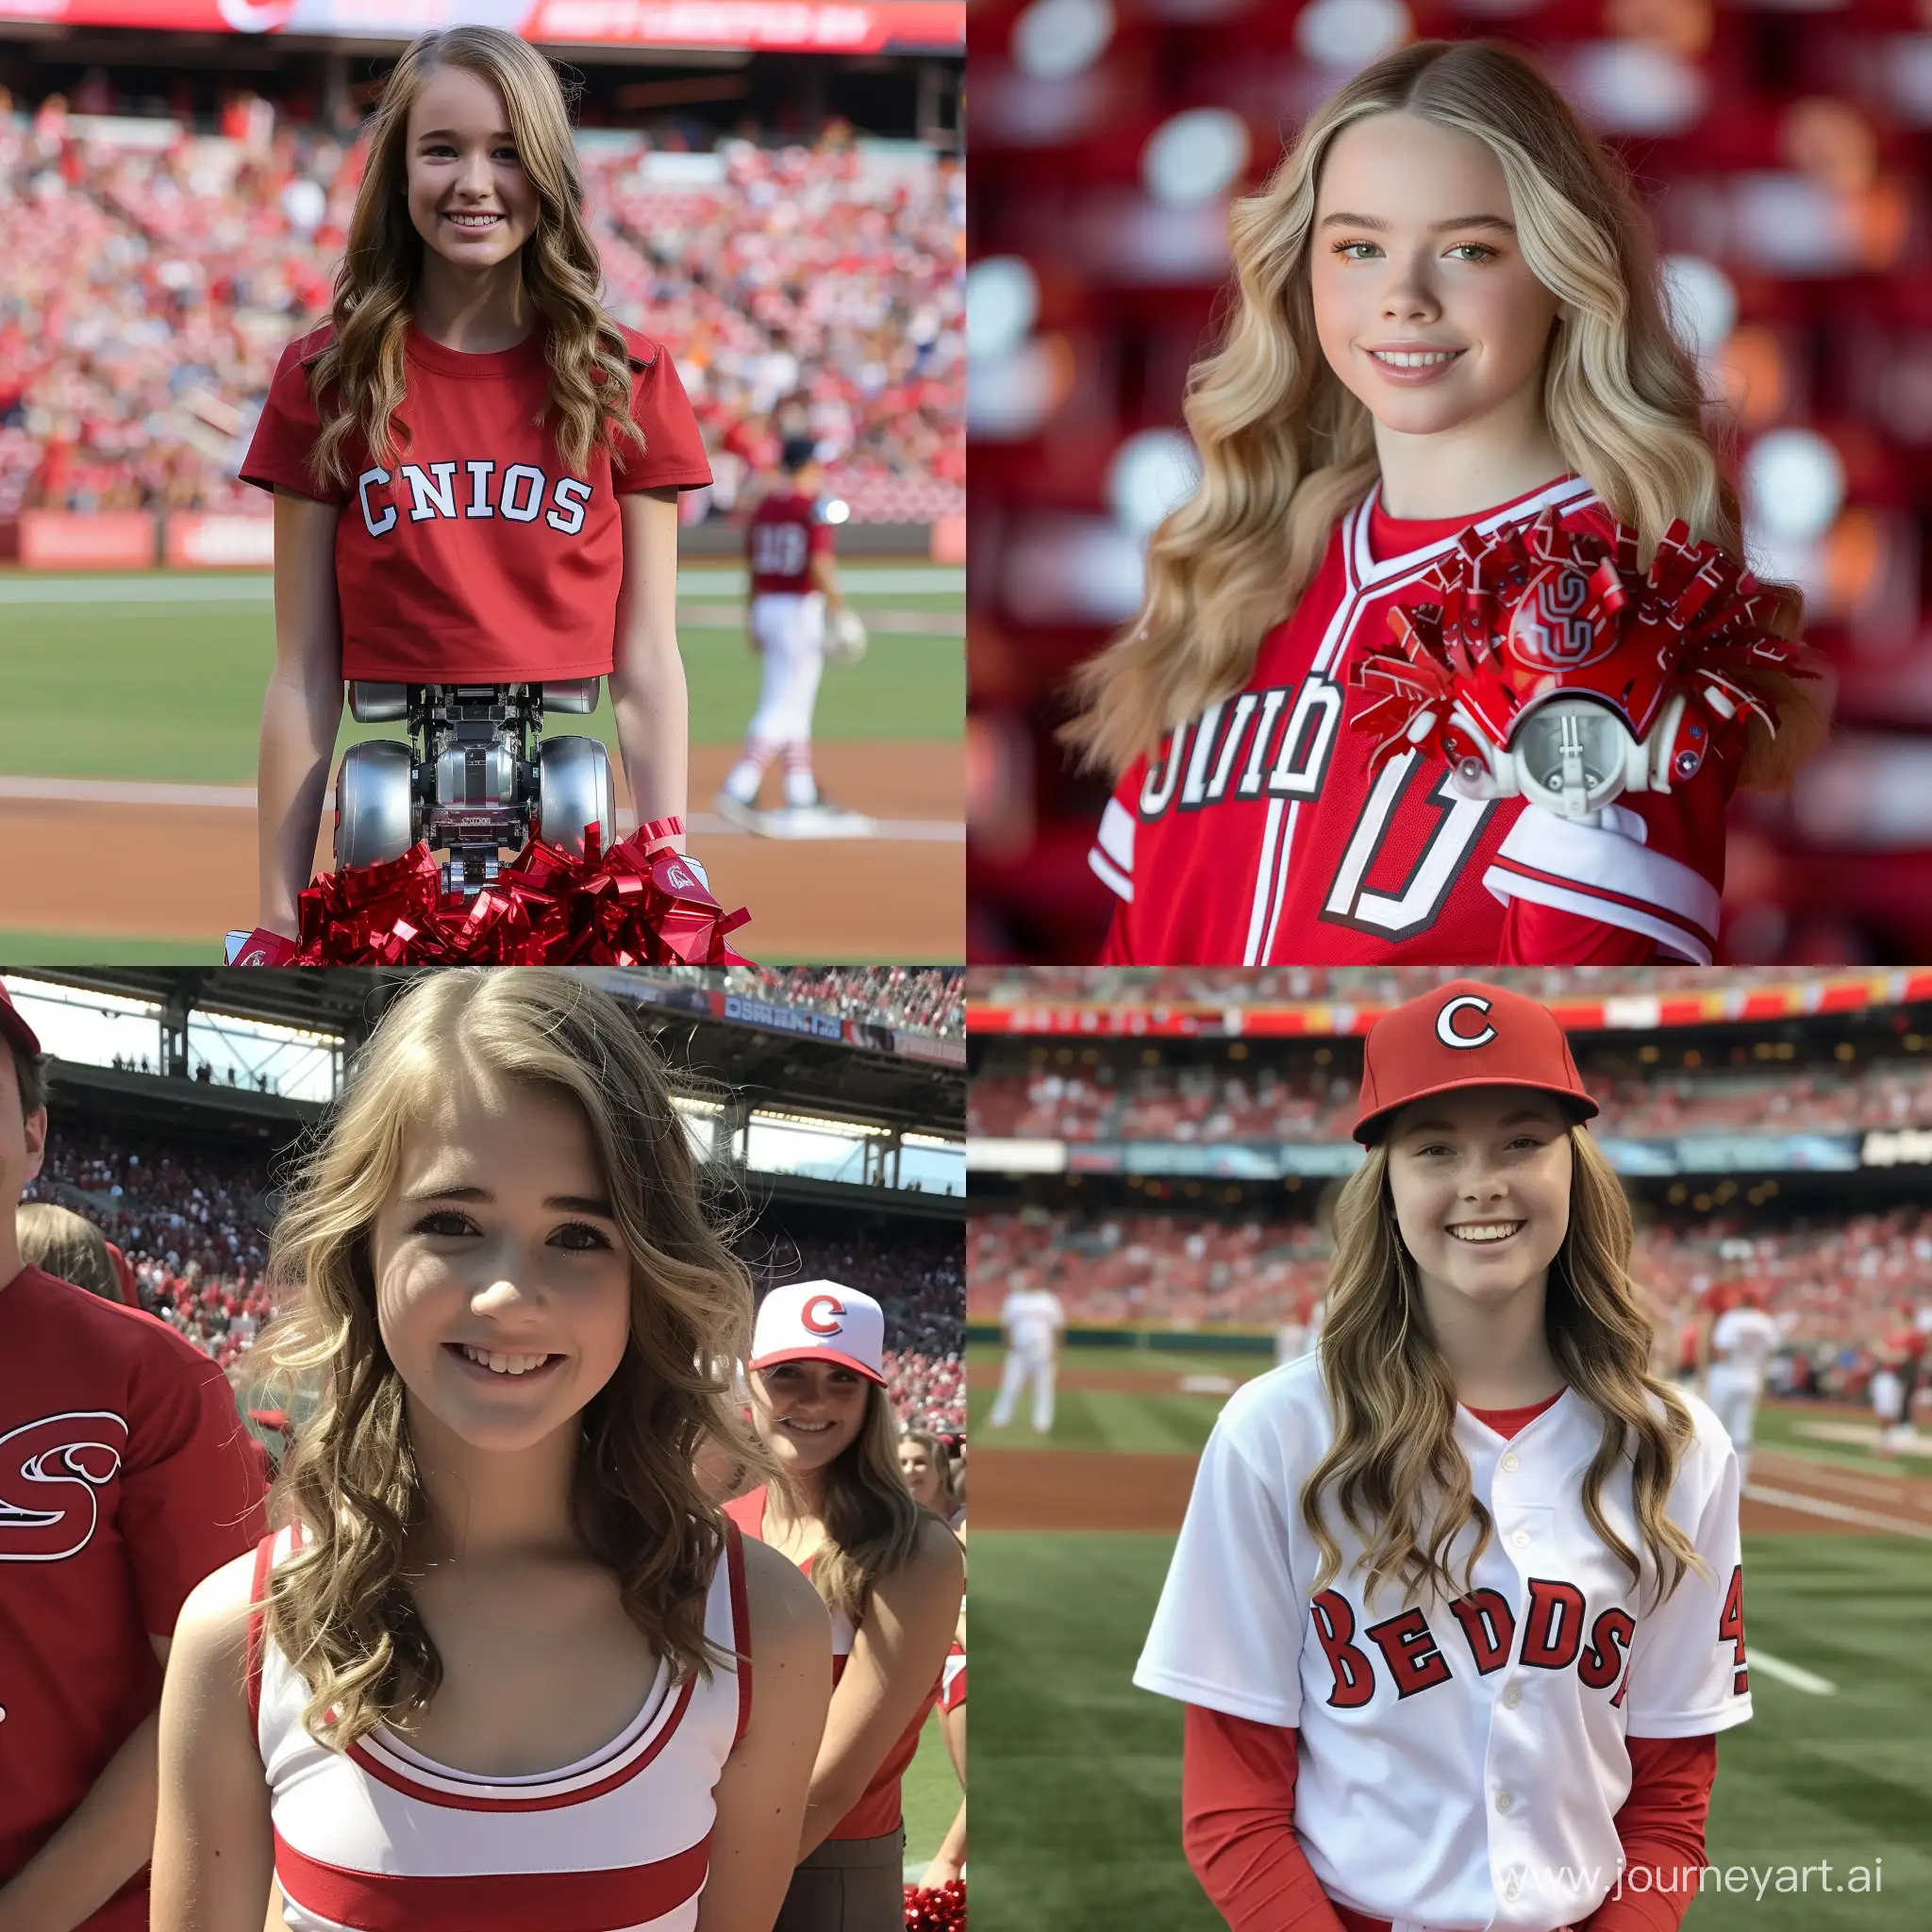 Cincinnati-Reds-Cheerleader-Robot-Futuristic-Twist-on-Youthful-Spirit